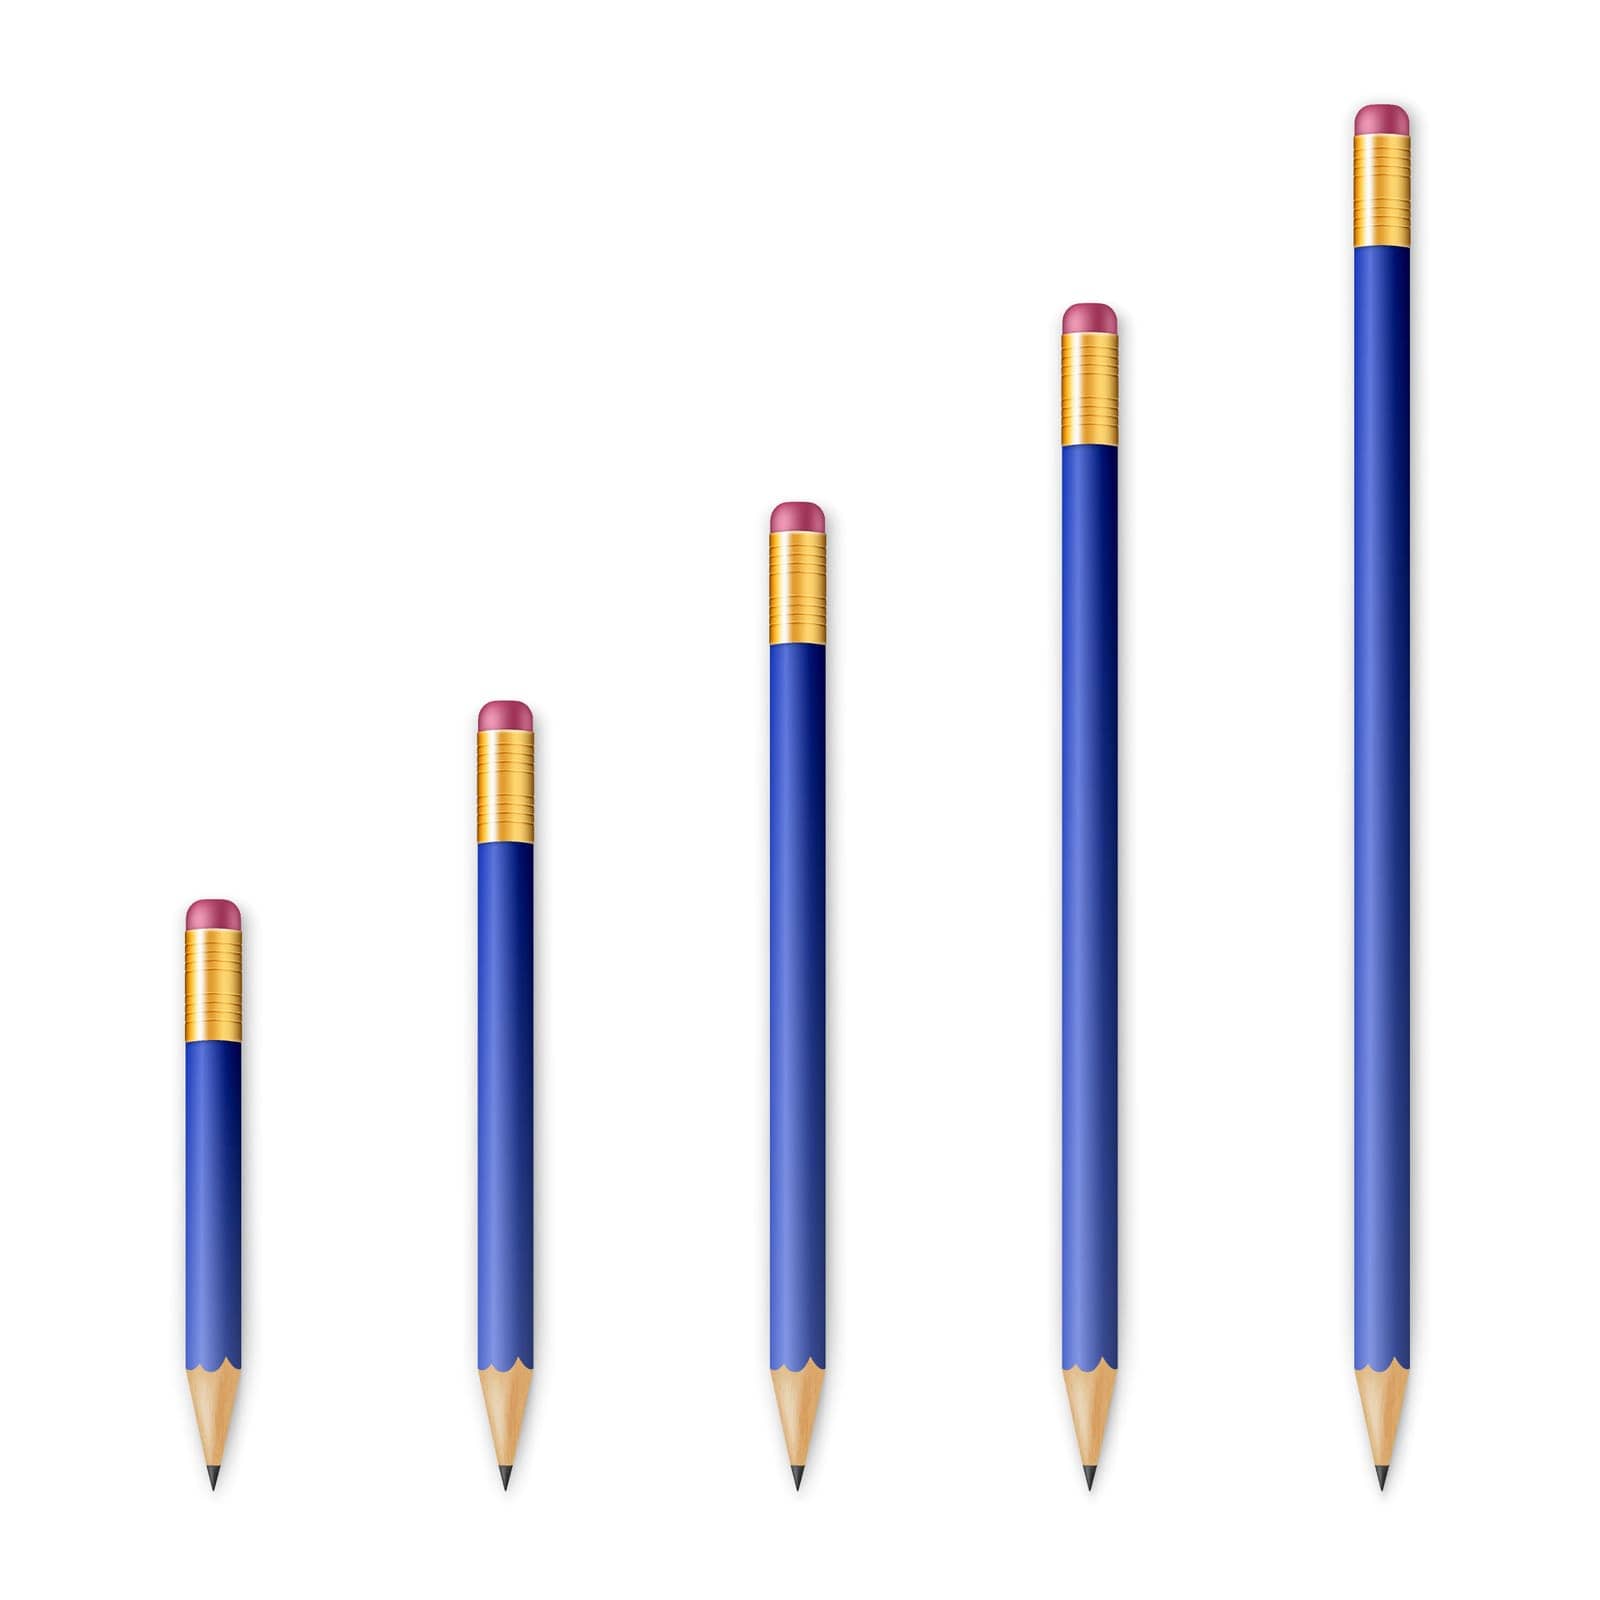 Blue wooden sharp pencils by Gomolach